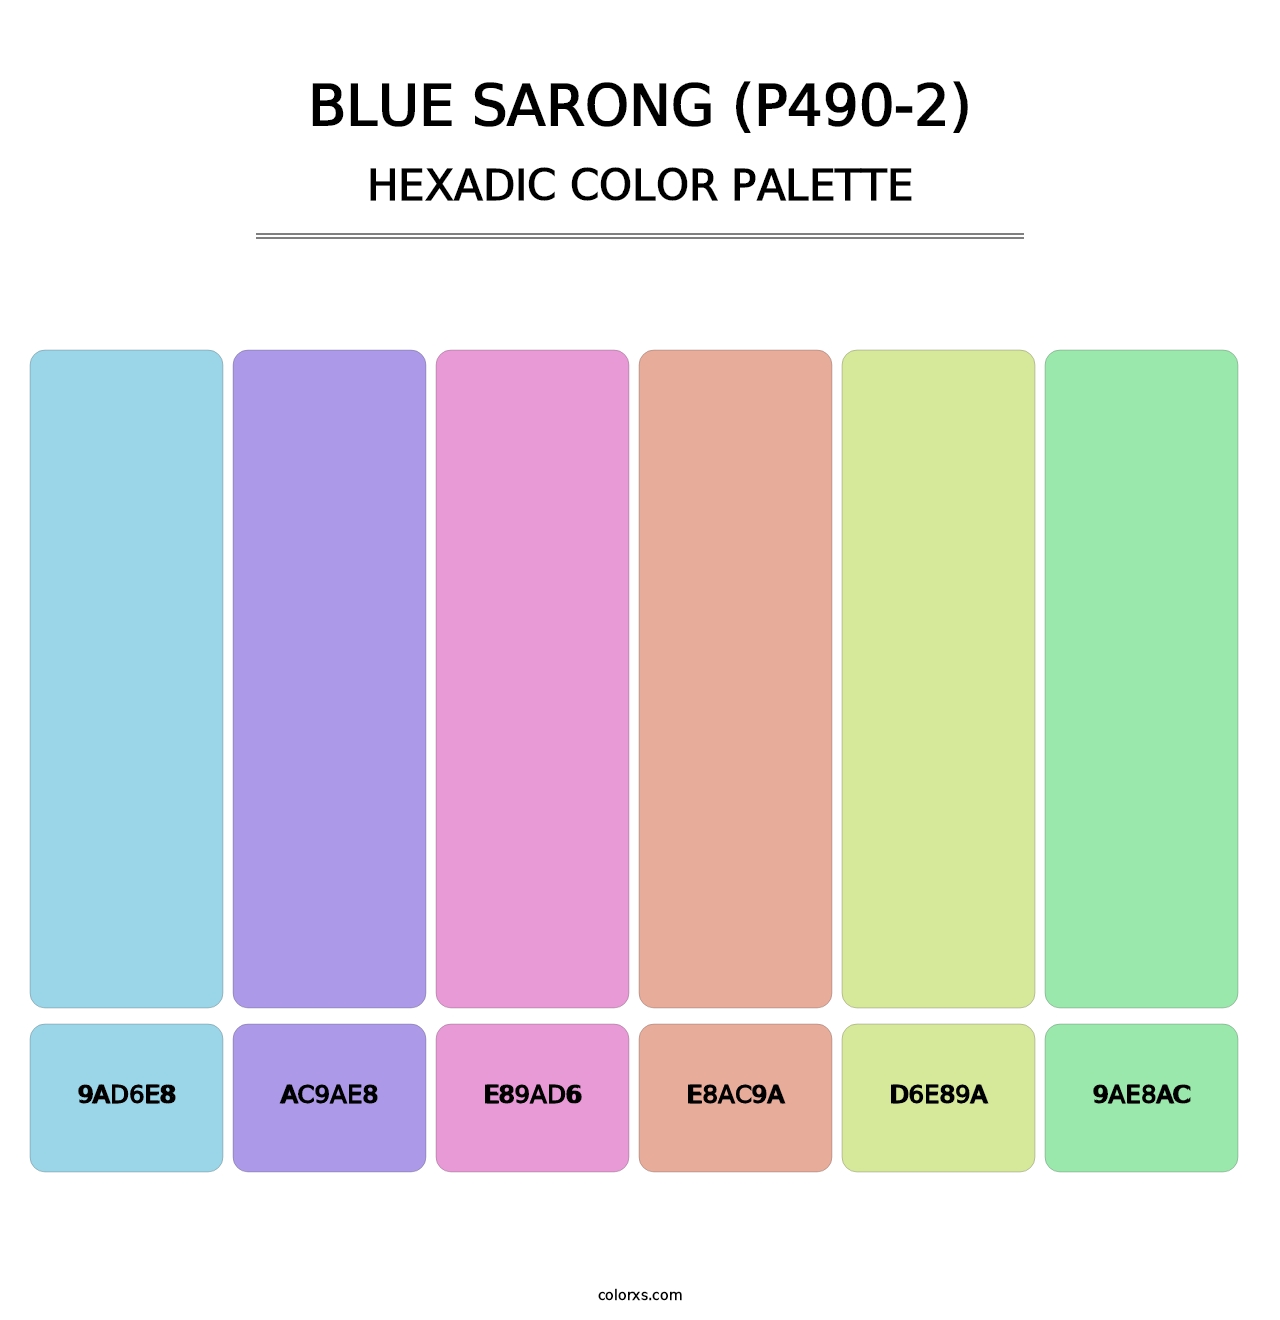 Blue Sarong (P490-2) - Hexadic Color Palette